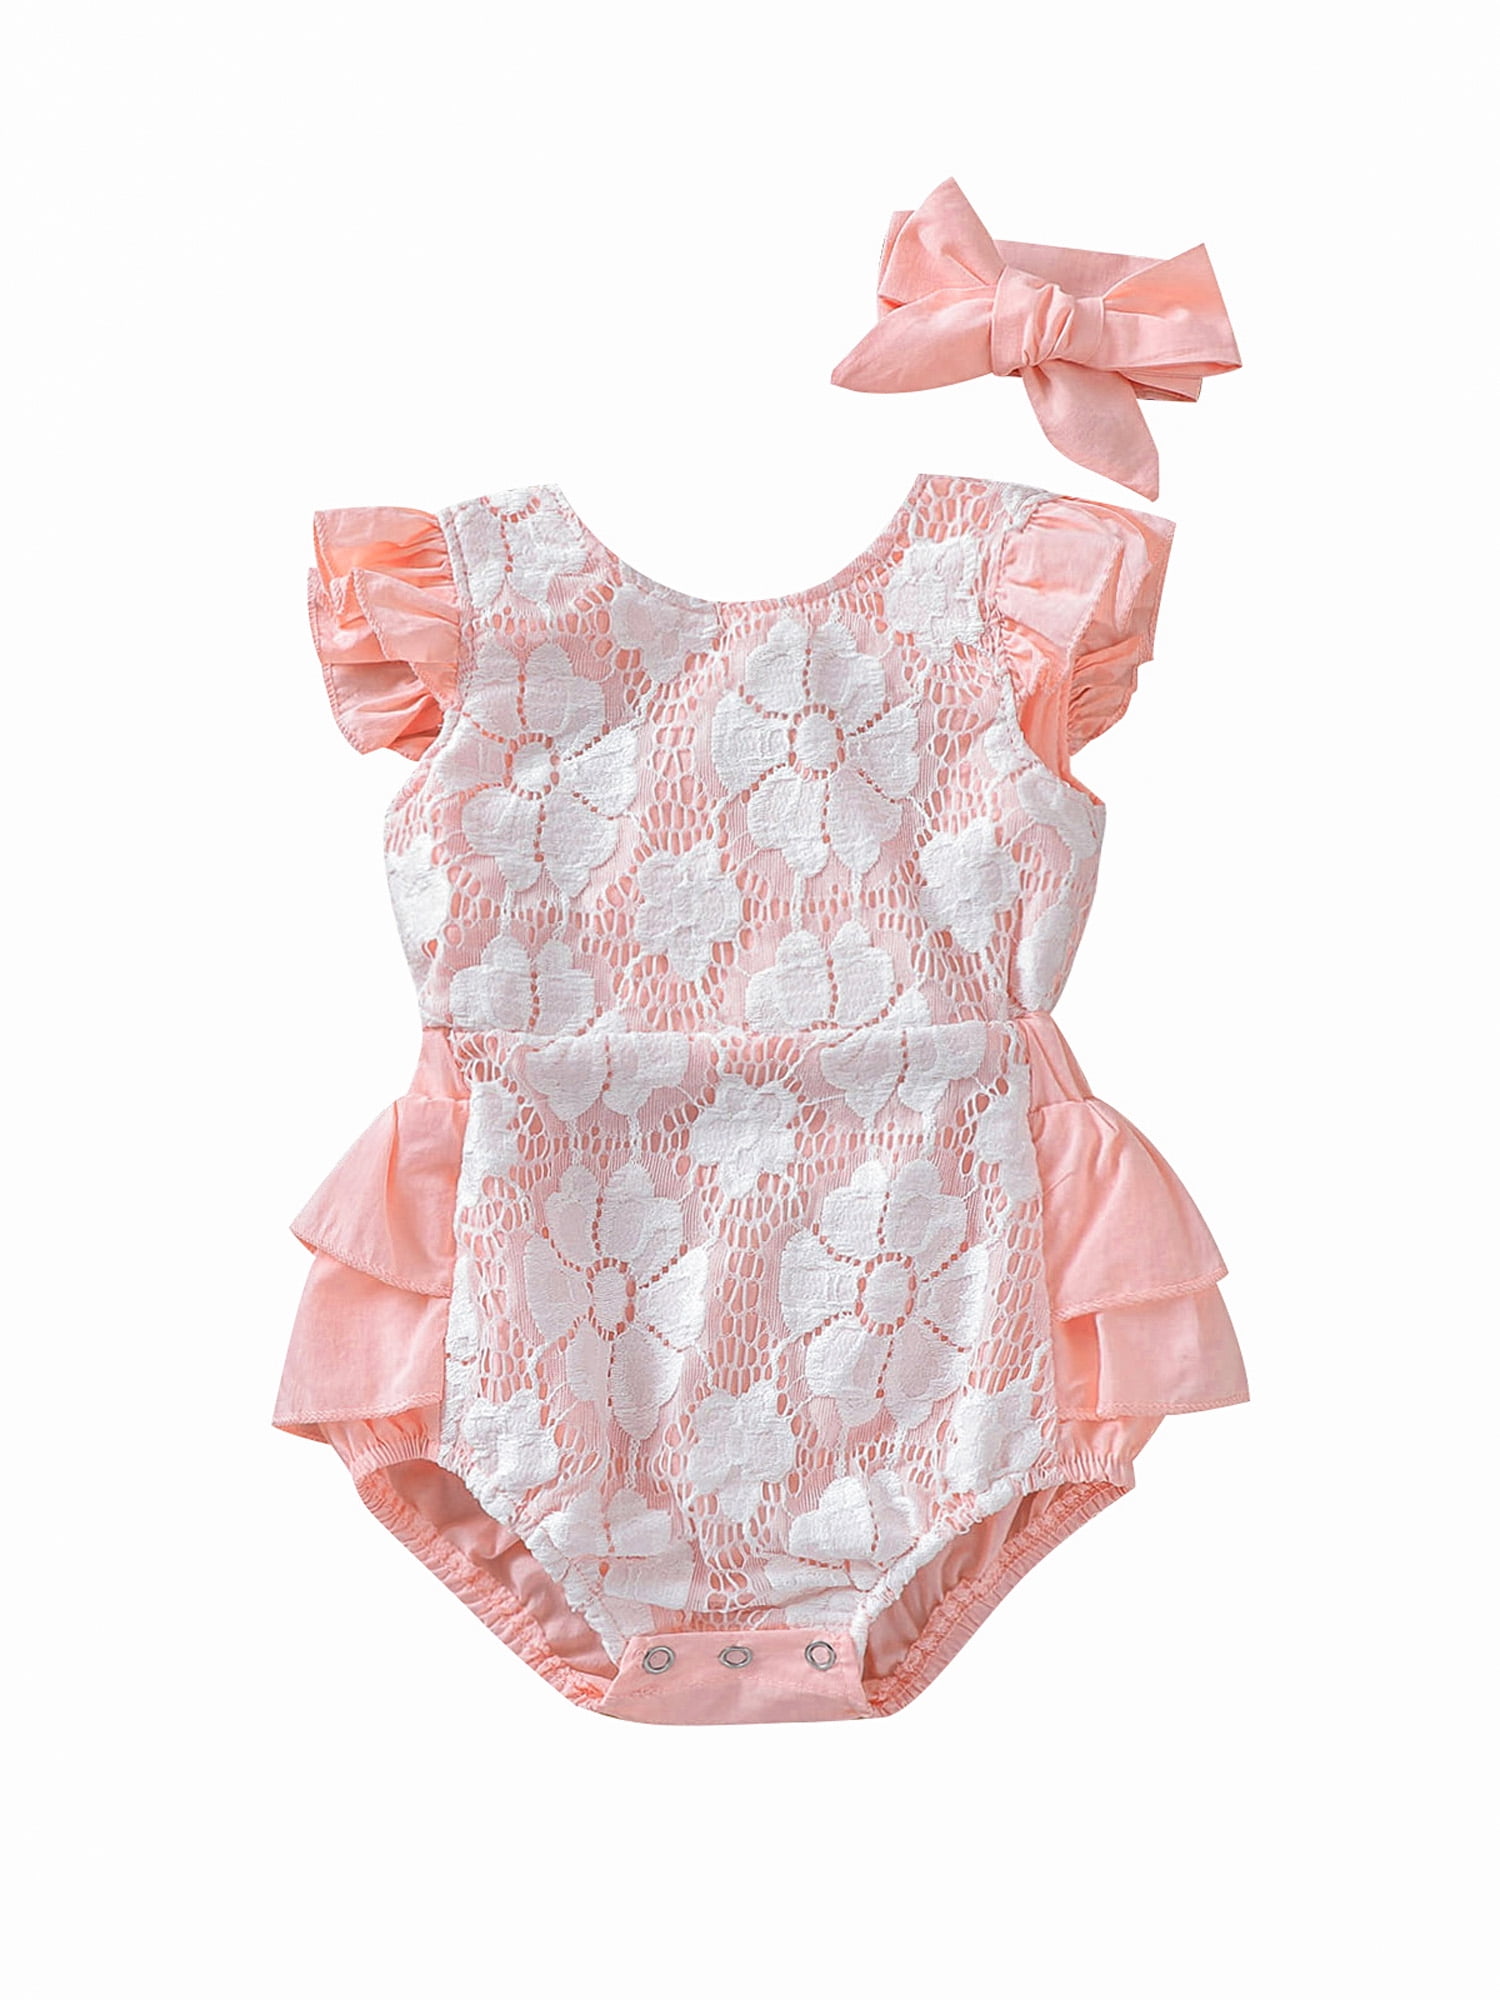 Details about   Infant Baby Girl Lace Princess Romper Newborn Bodysuit Jumpsuit Clothes Outfits 